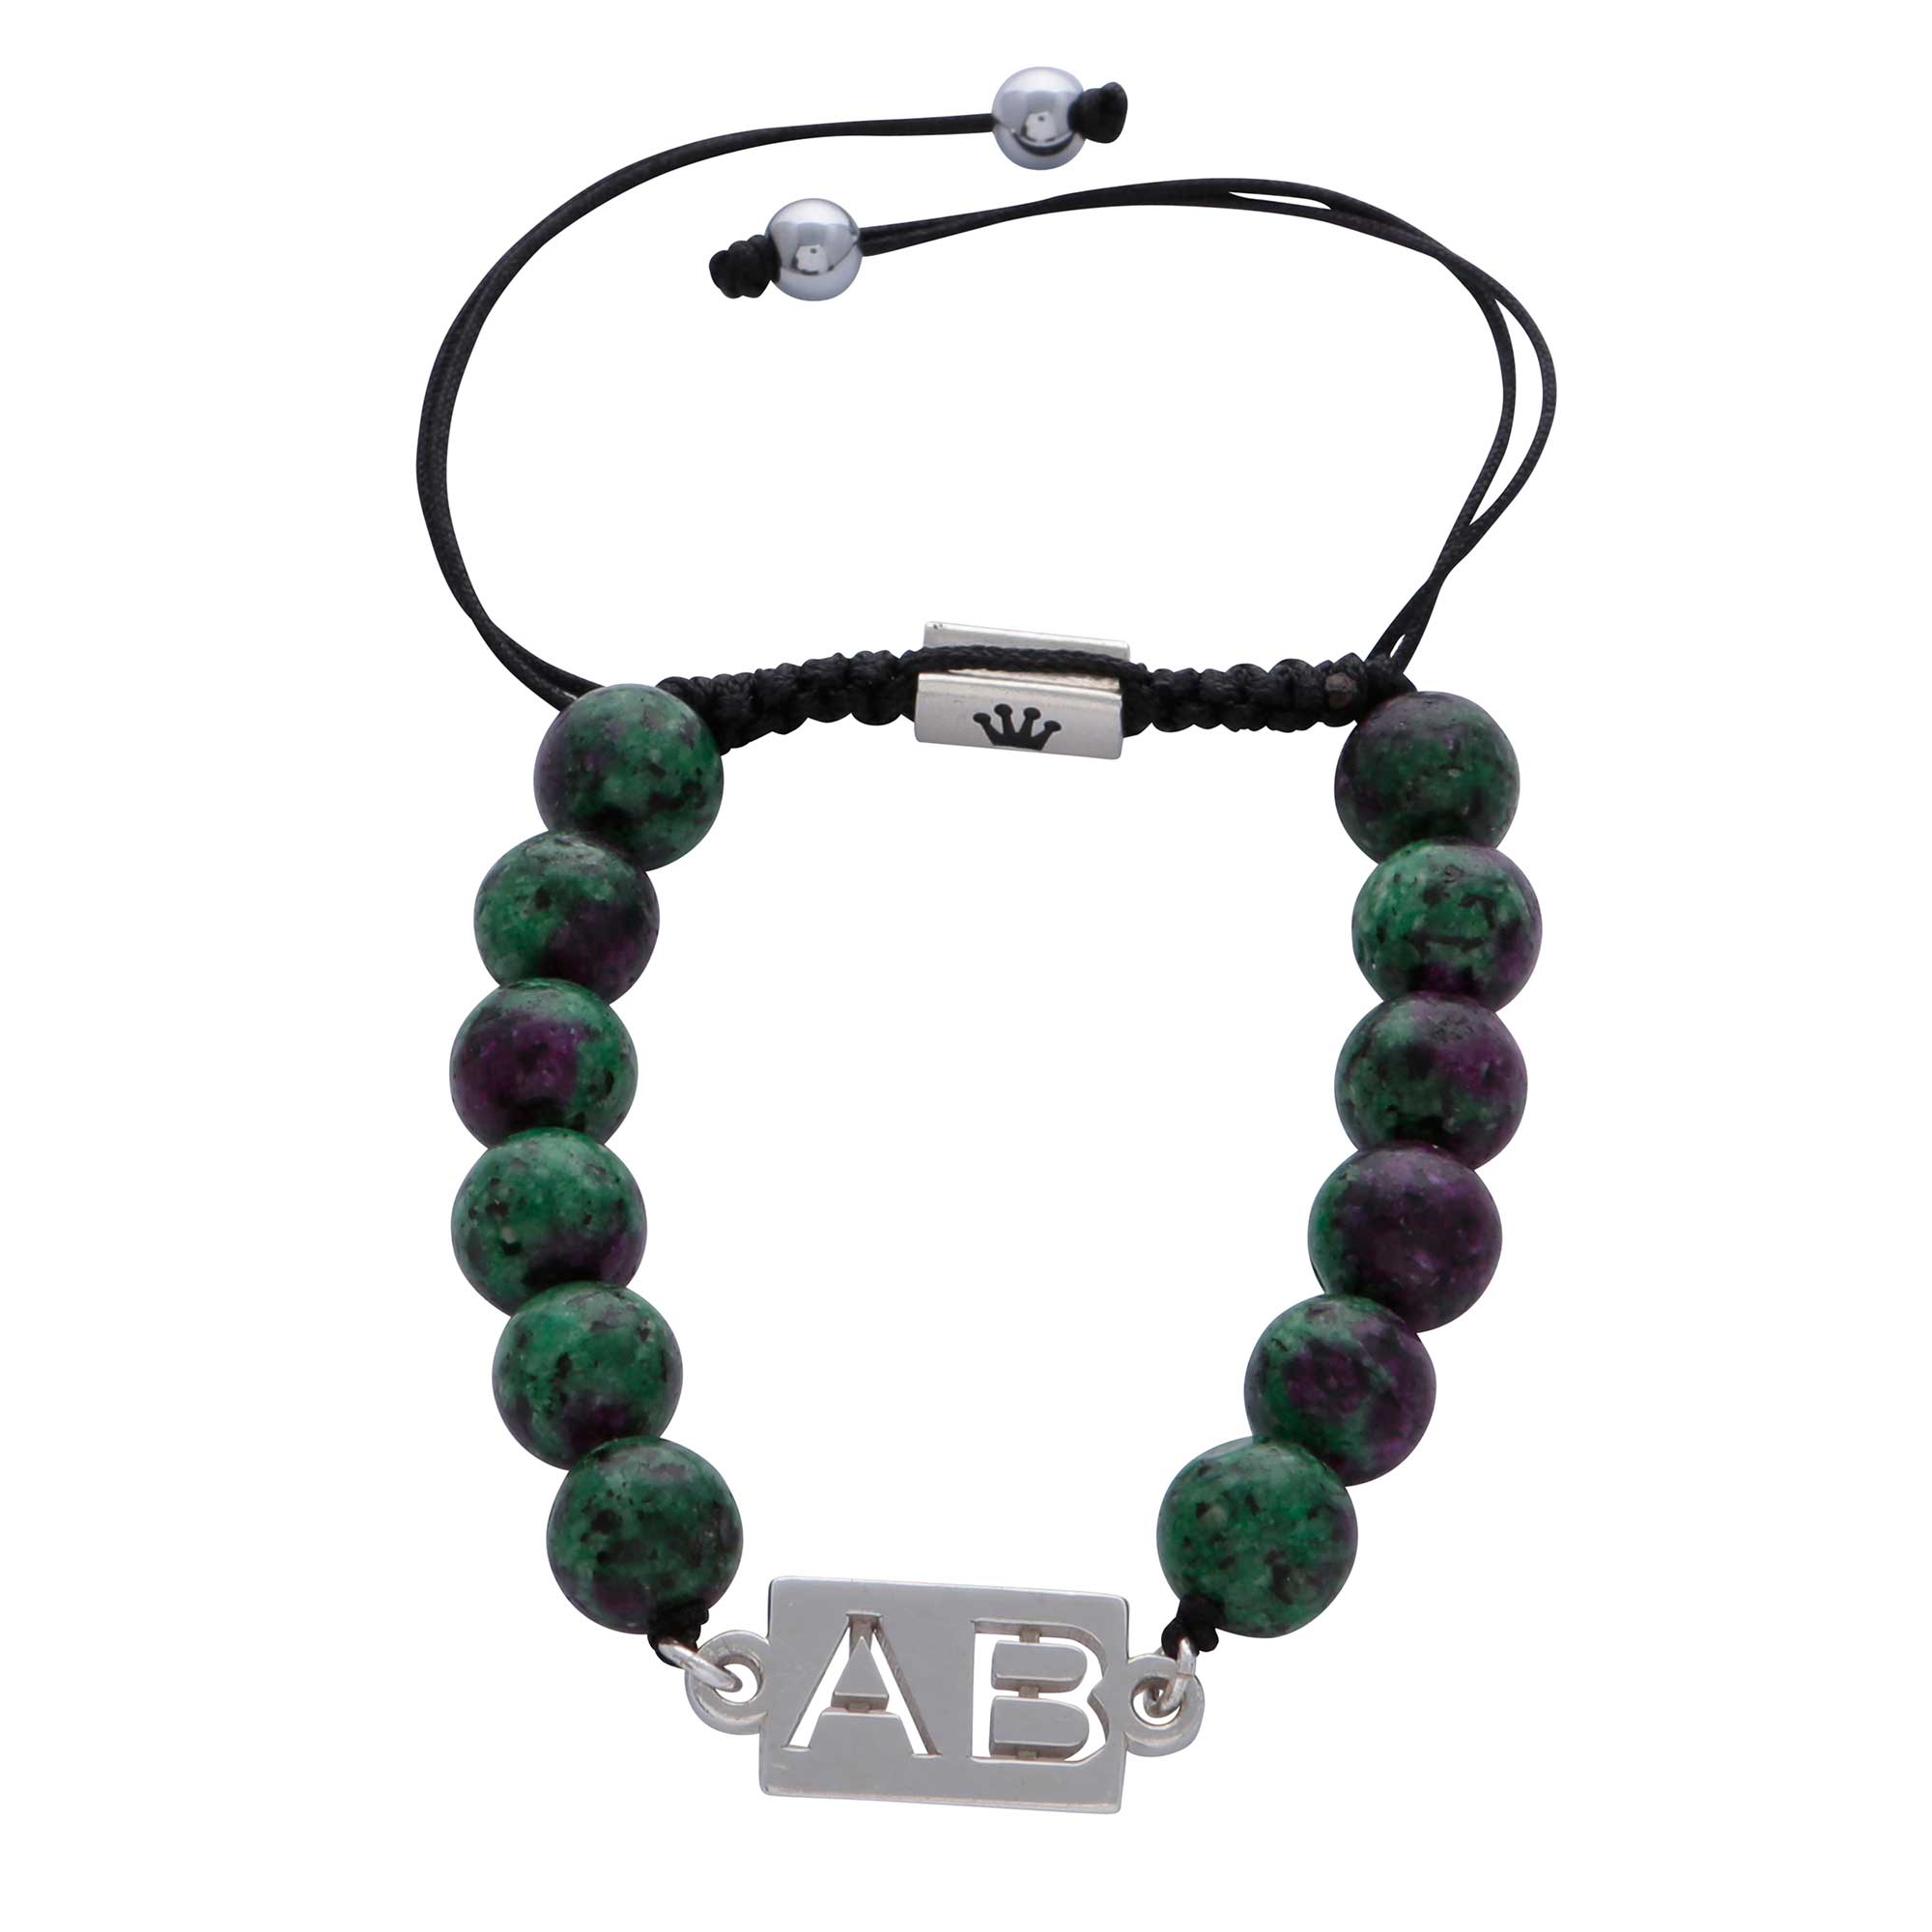 personalised-custom-dyed-epidote-natural-stone-beaded-bracelet-for-men-him